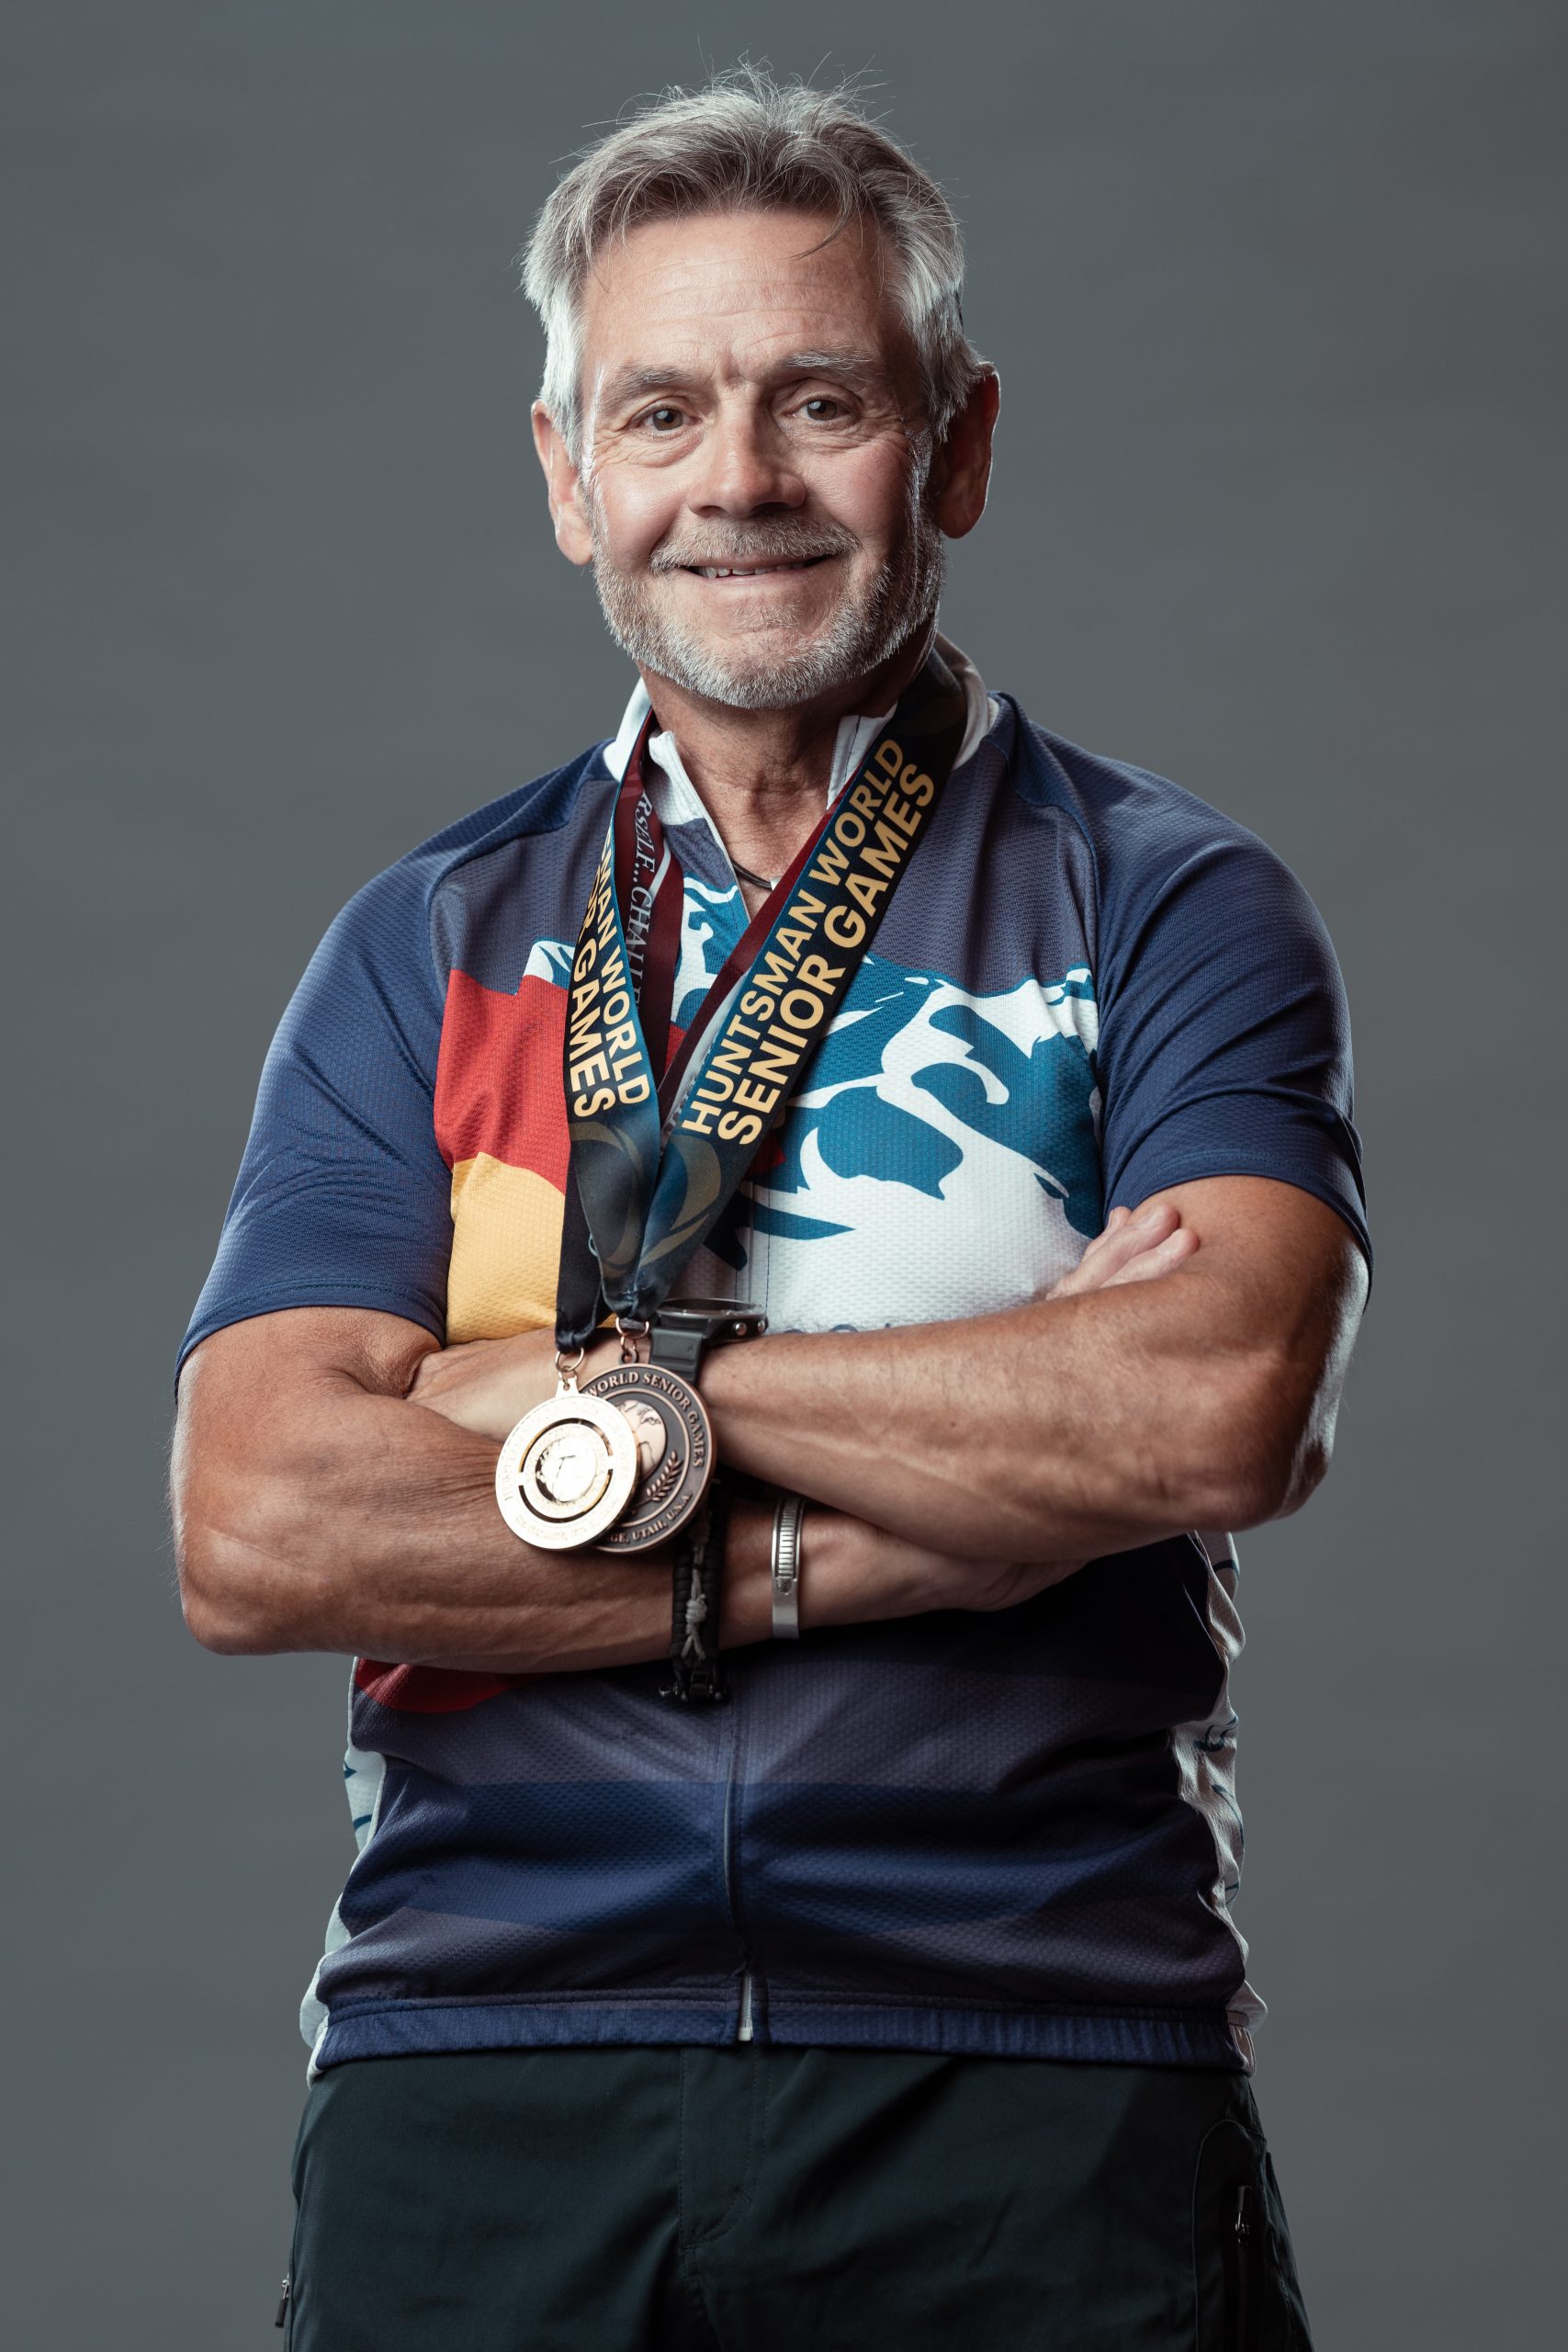 senior games medalist image